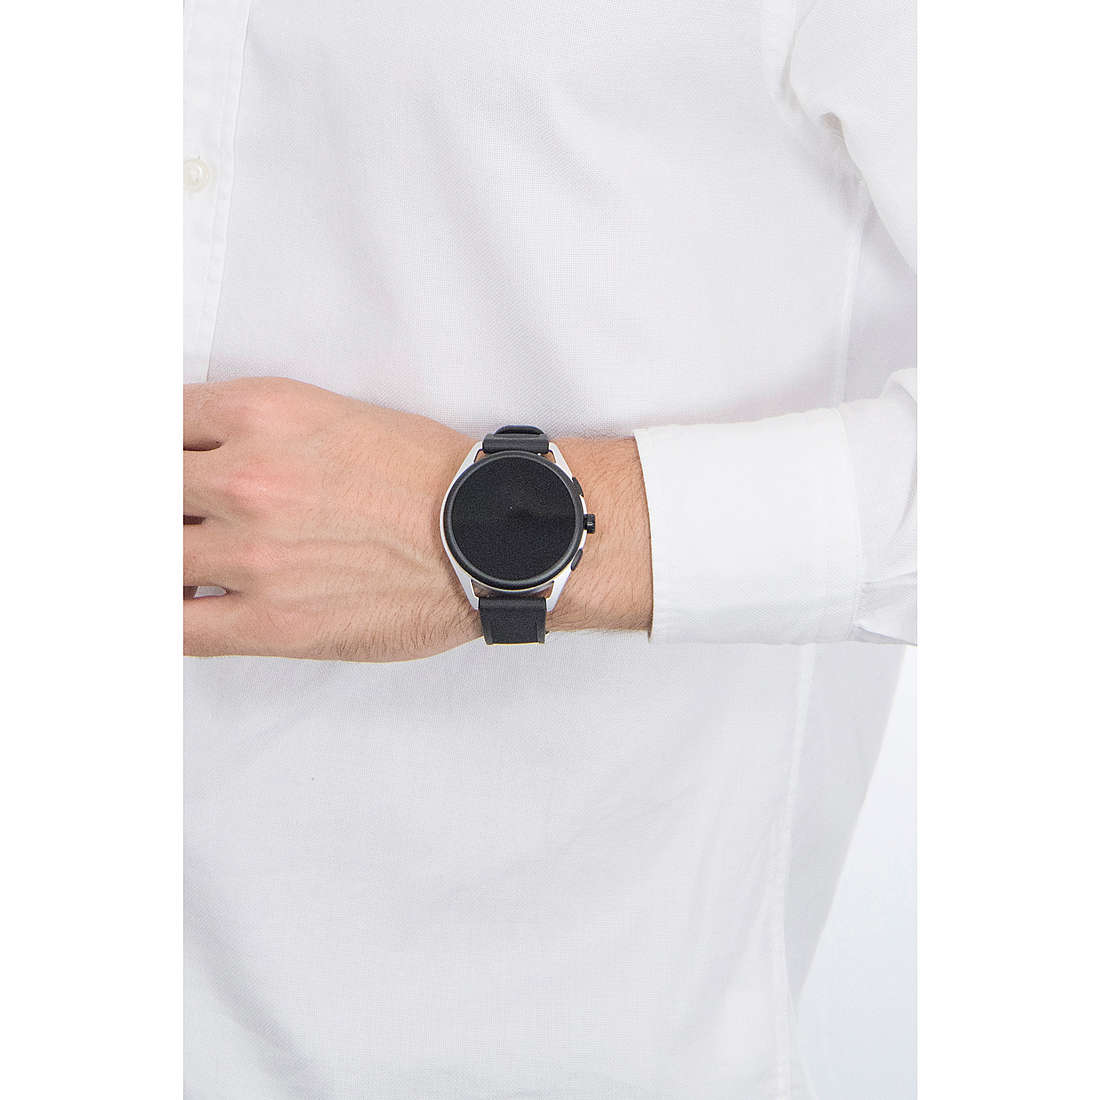 Emporio Armani Smartwatches uomo ART5021 indosso